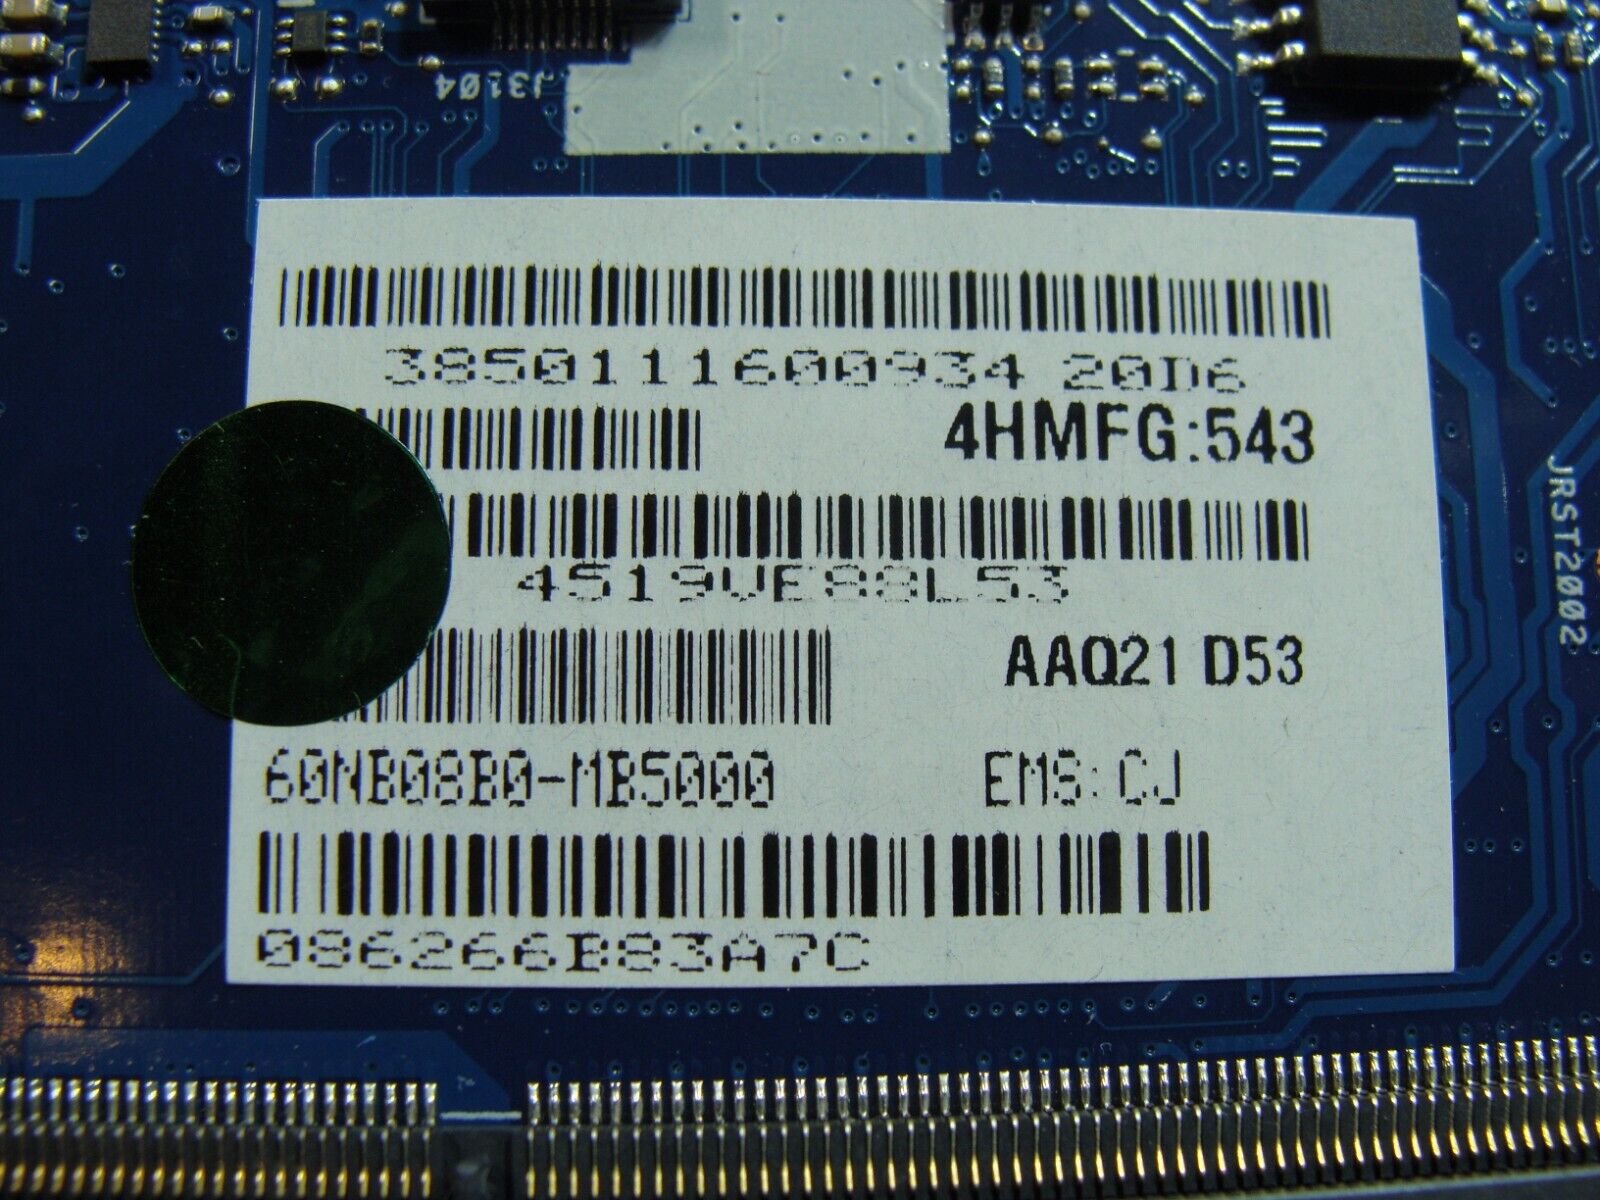 Asus ROG GL551JW-WH71 15.6 i7-4720HQ 2.6GHz GTX960M Motherboard 60NB08B0-MB5000